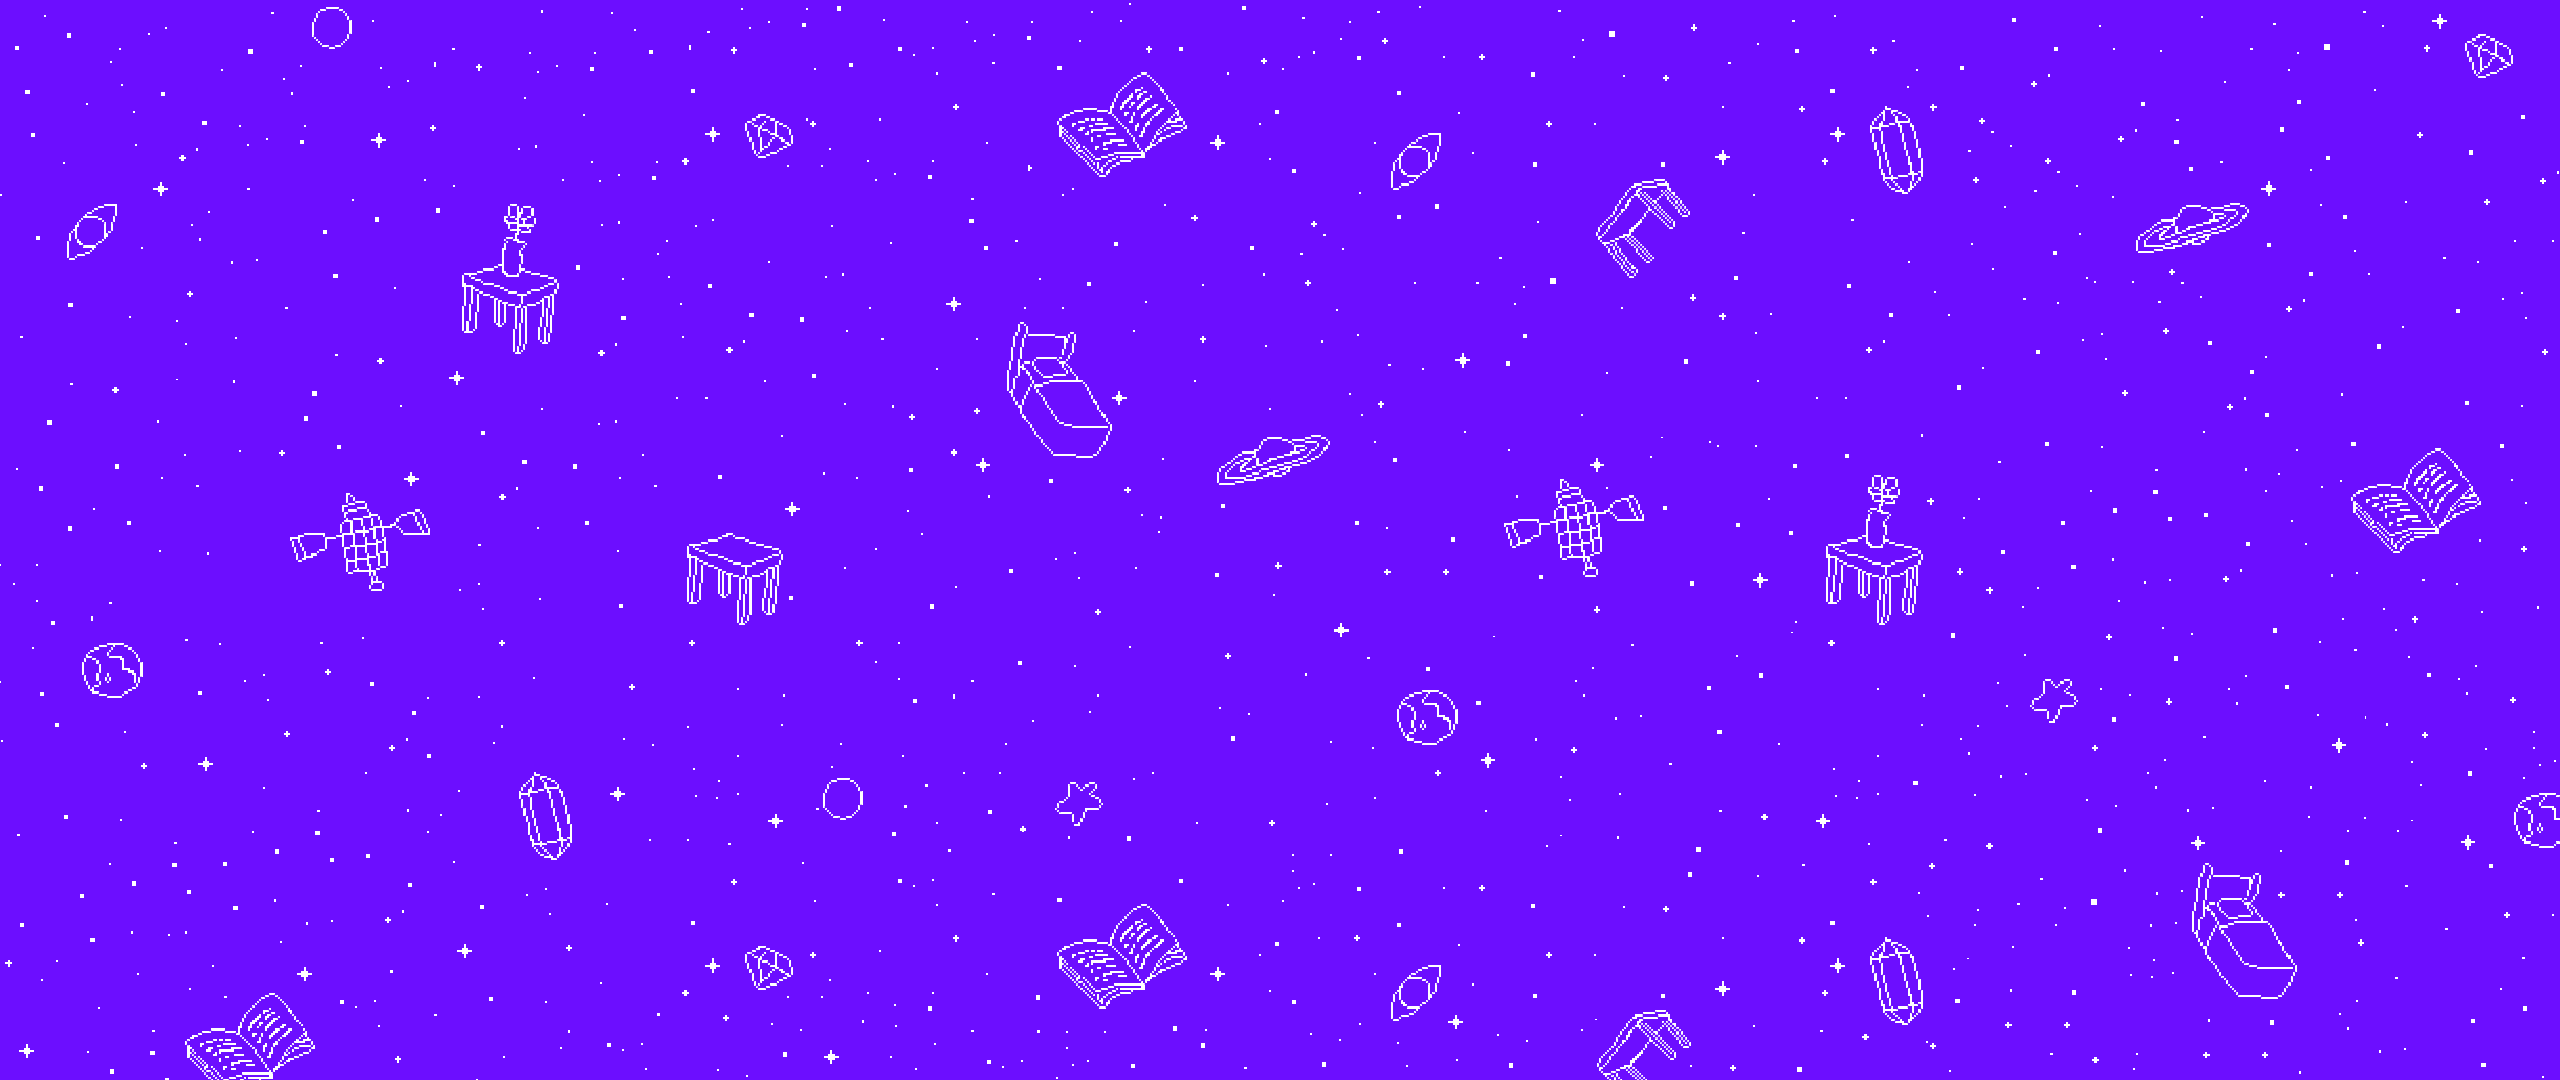 Omori Video Game Stars Pixel Art Sky 2560x1080